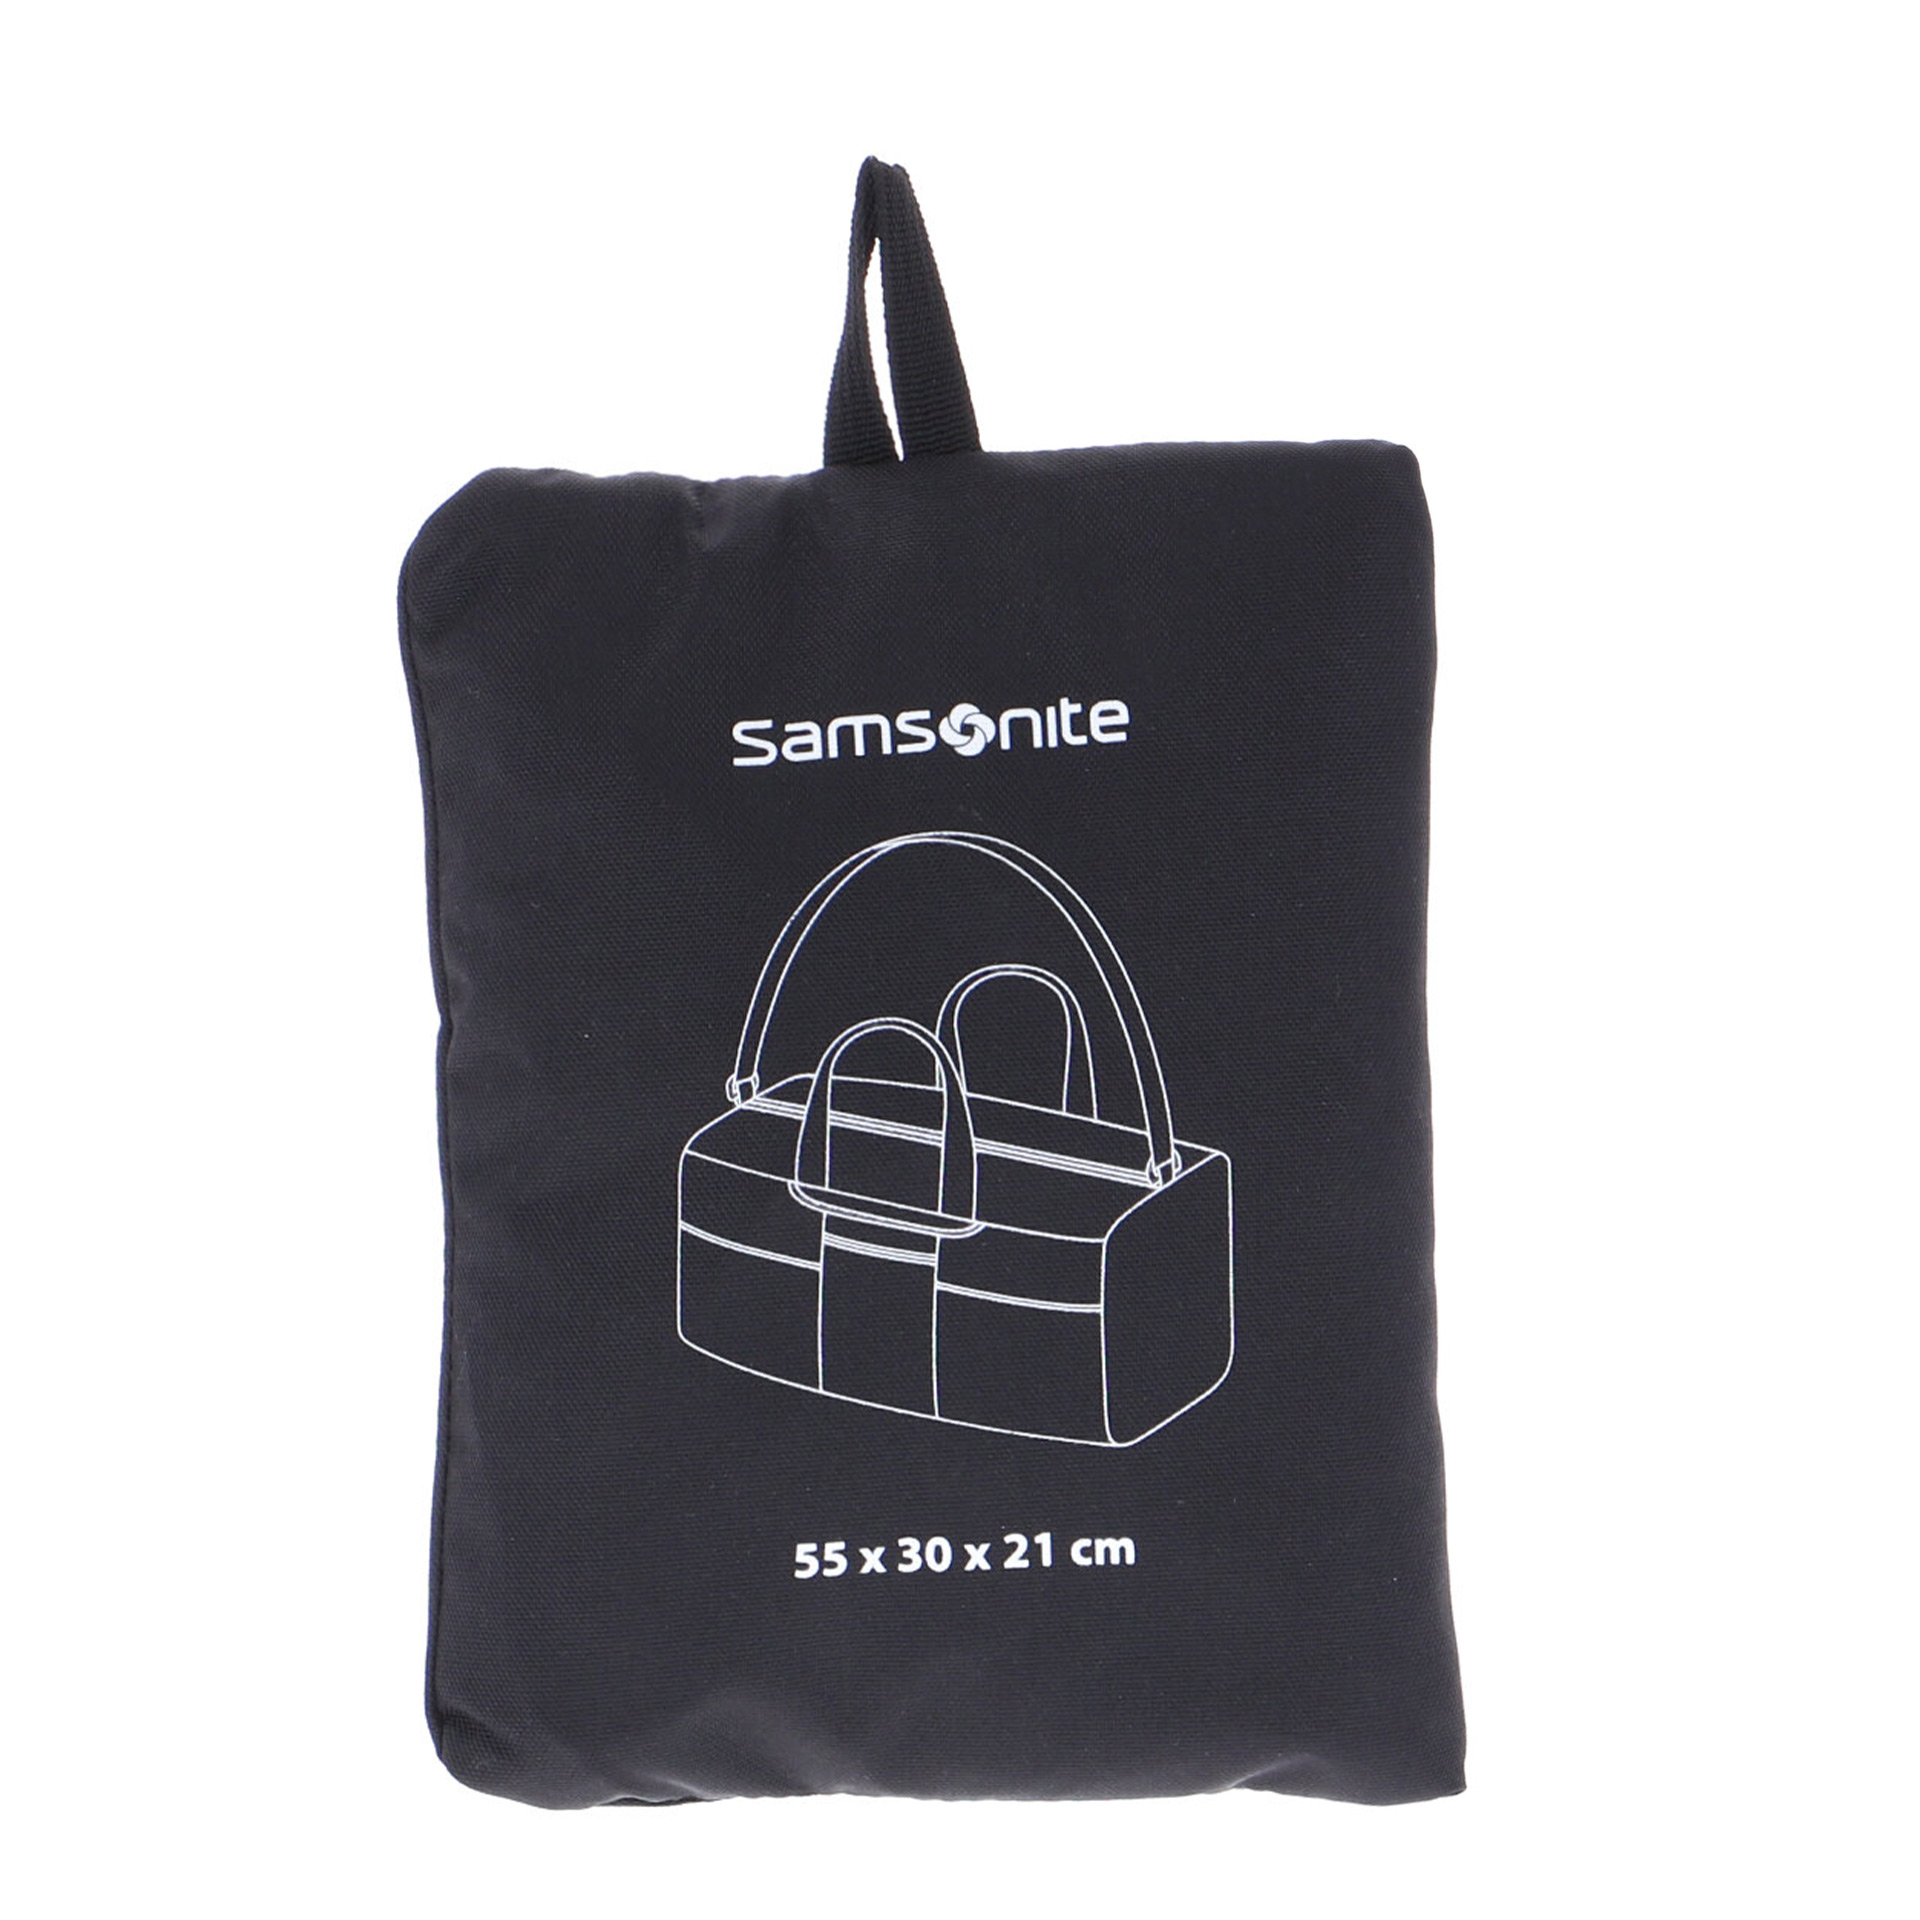 Samsonite Global Travel Accessories Reisetasche black